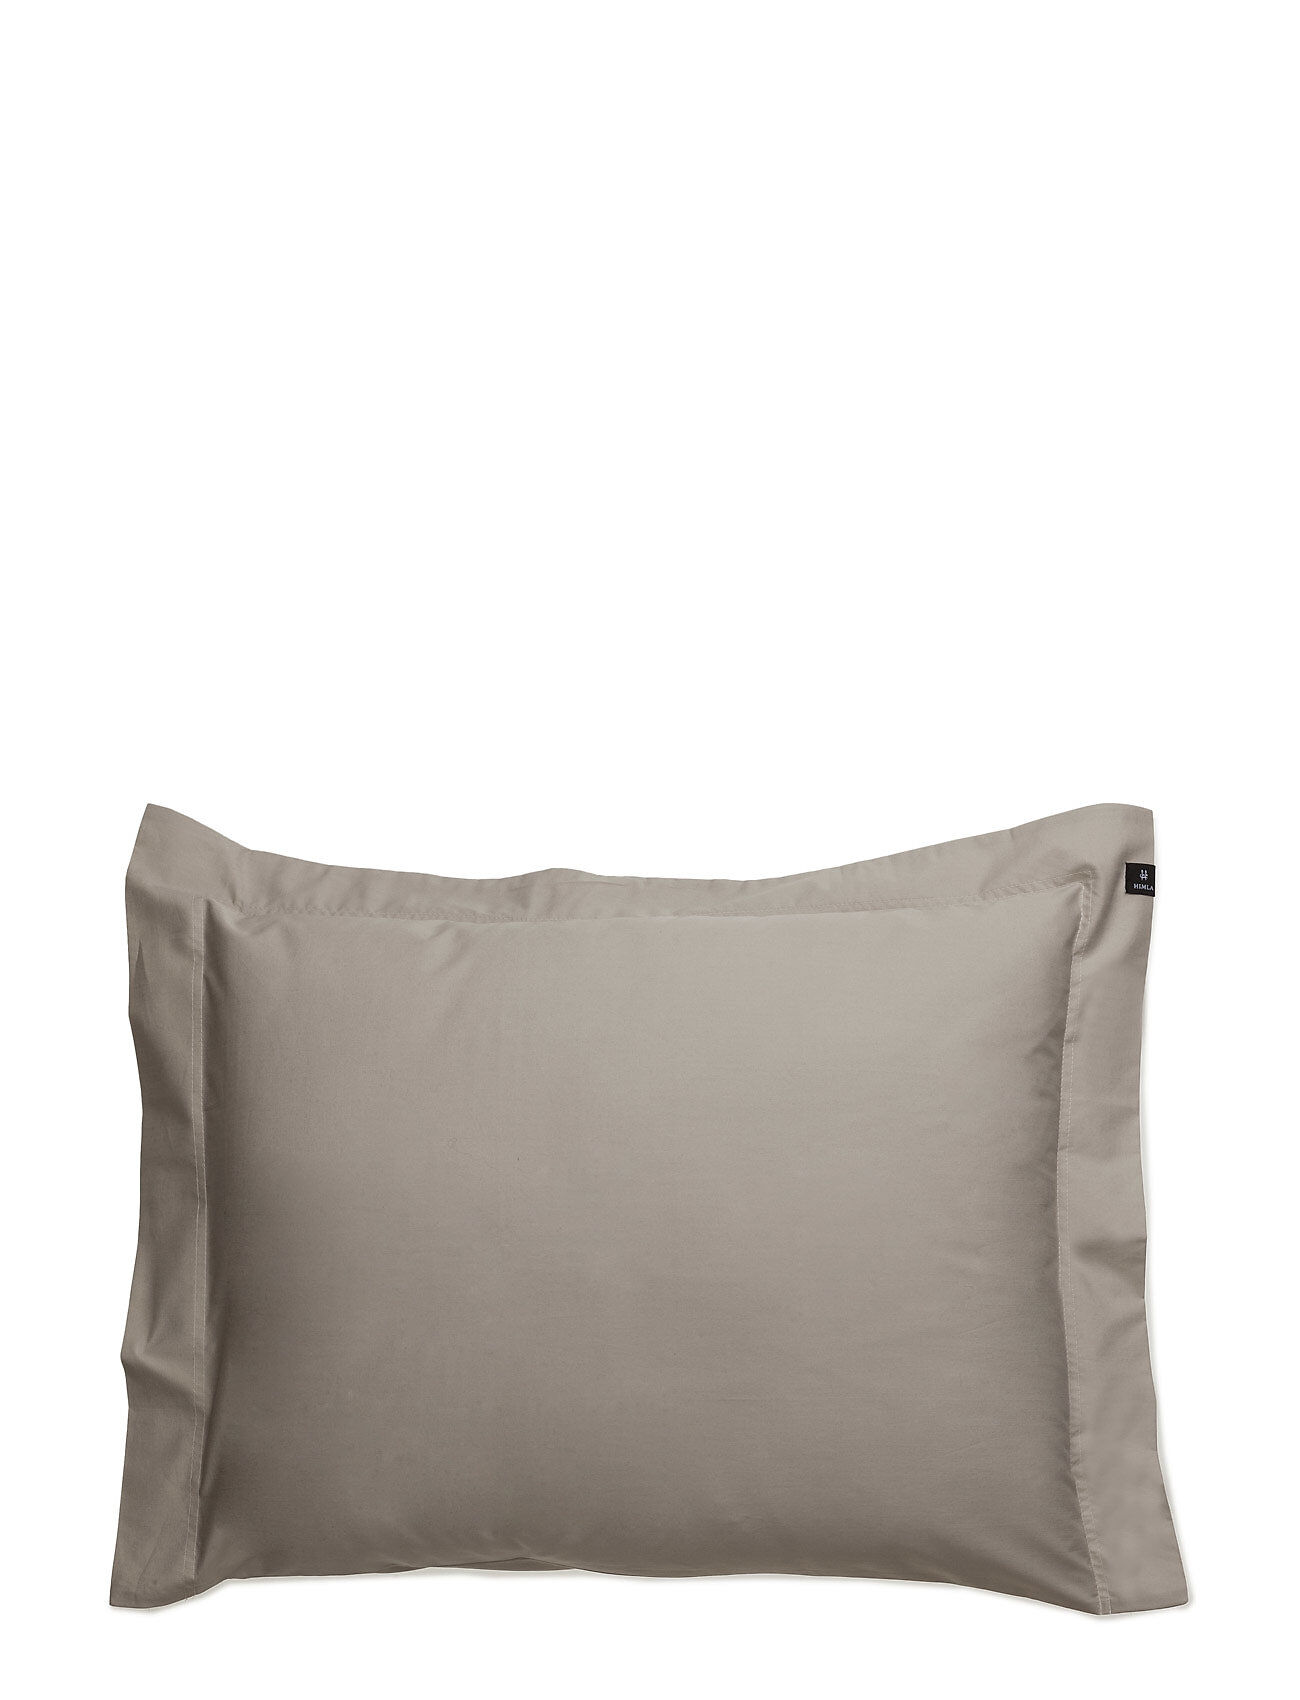 Himla Drottningholm Pillowcase With Wing Home Textiles Bedtextiles Pillow Cases Beige Himla